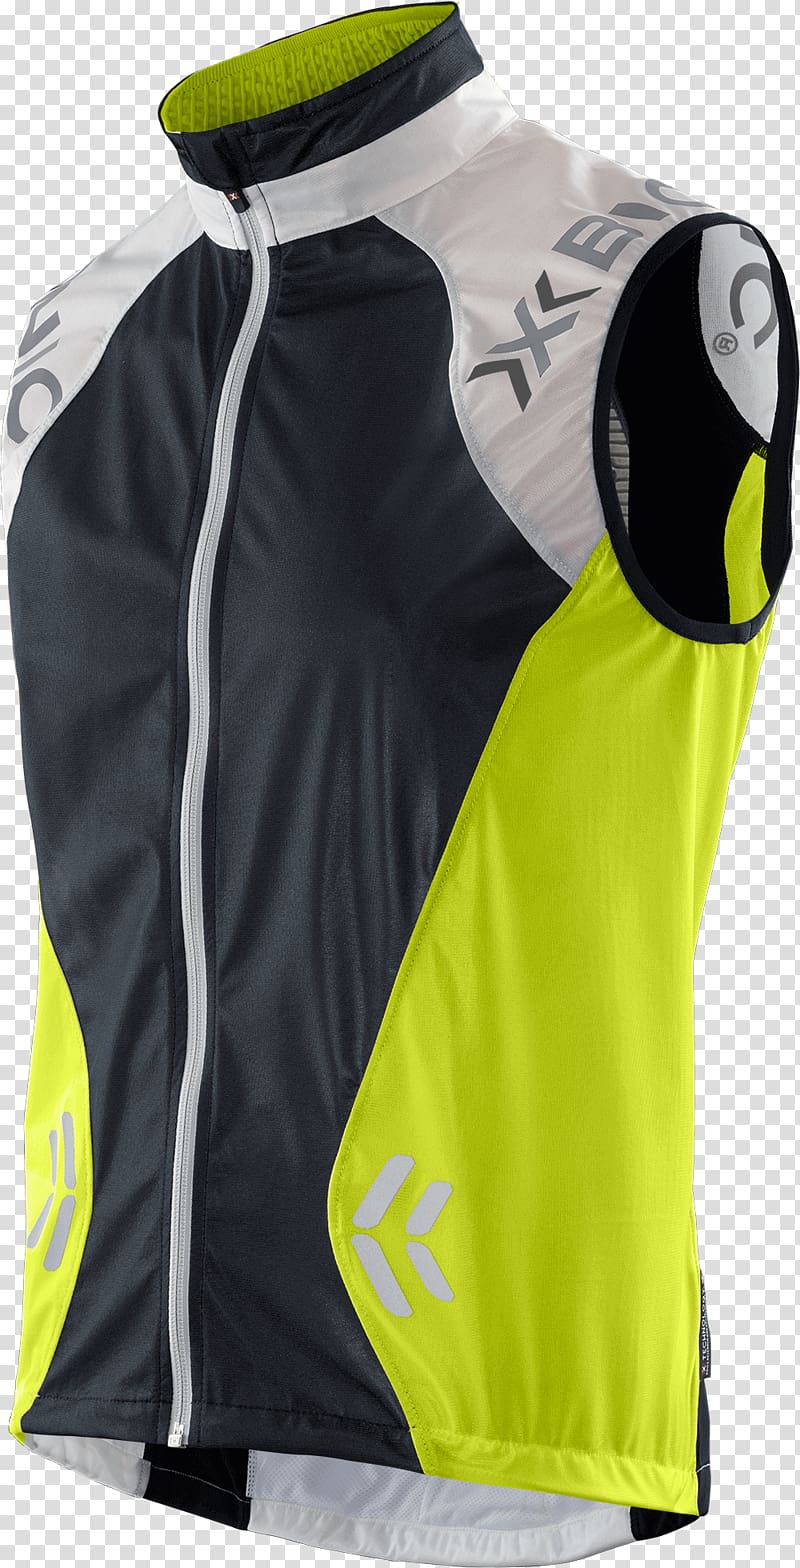 Waistcoat Jacket Clothing Nike Free Windstopper, white vest transparent background PNG clipart